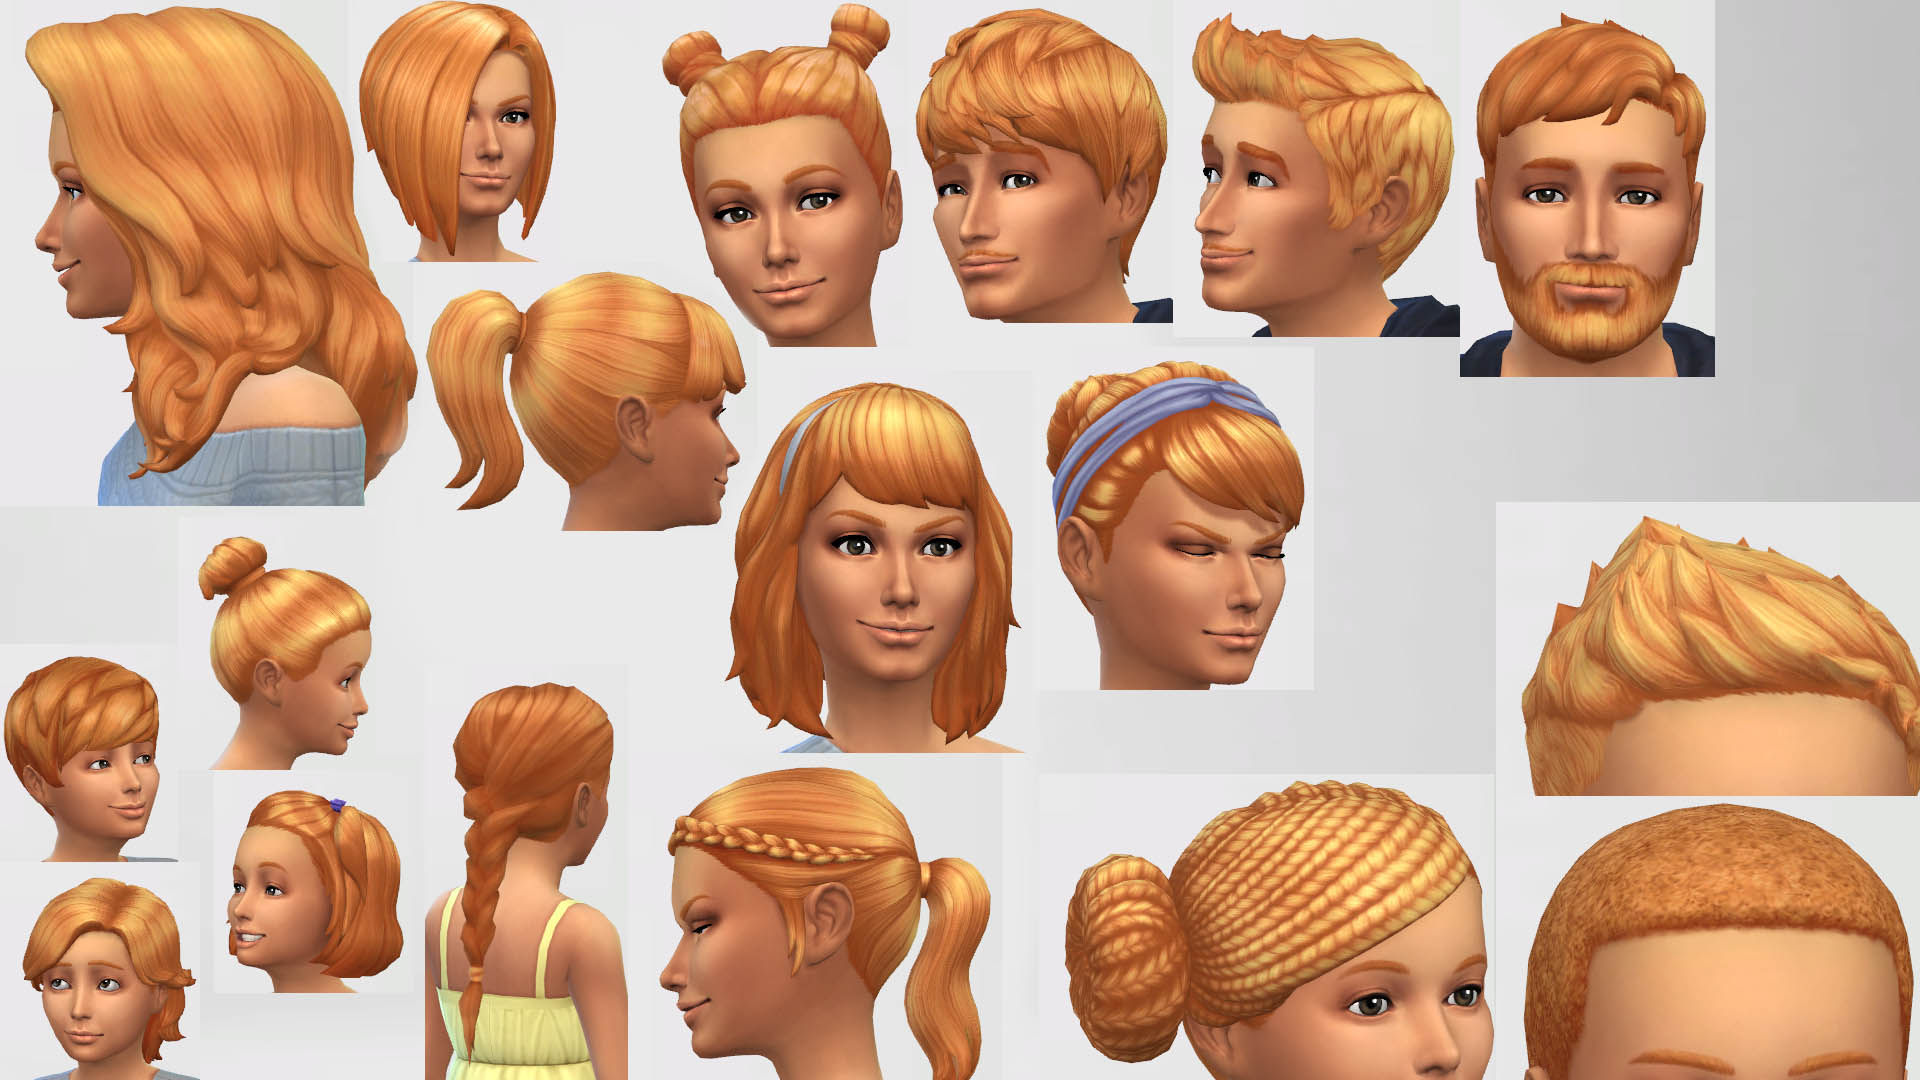 Sims 4 HairMod Peatix. sims-4-hair-color-mod.peatix.com. 